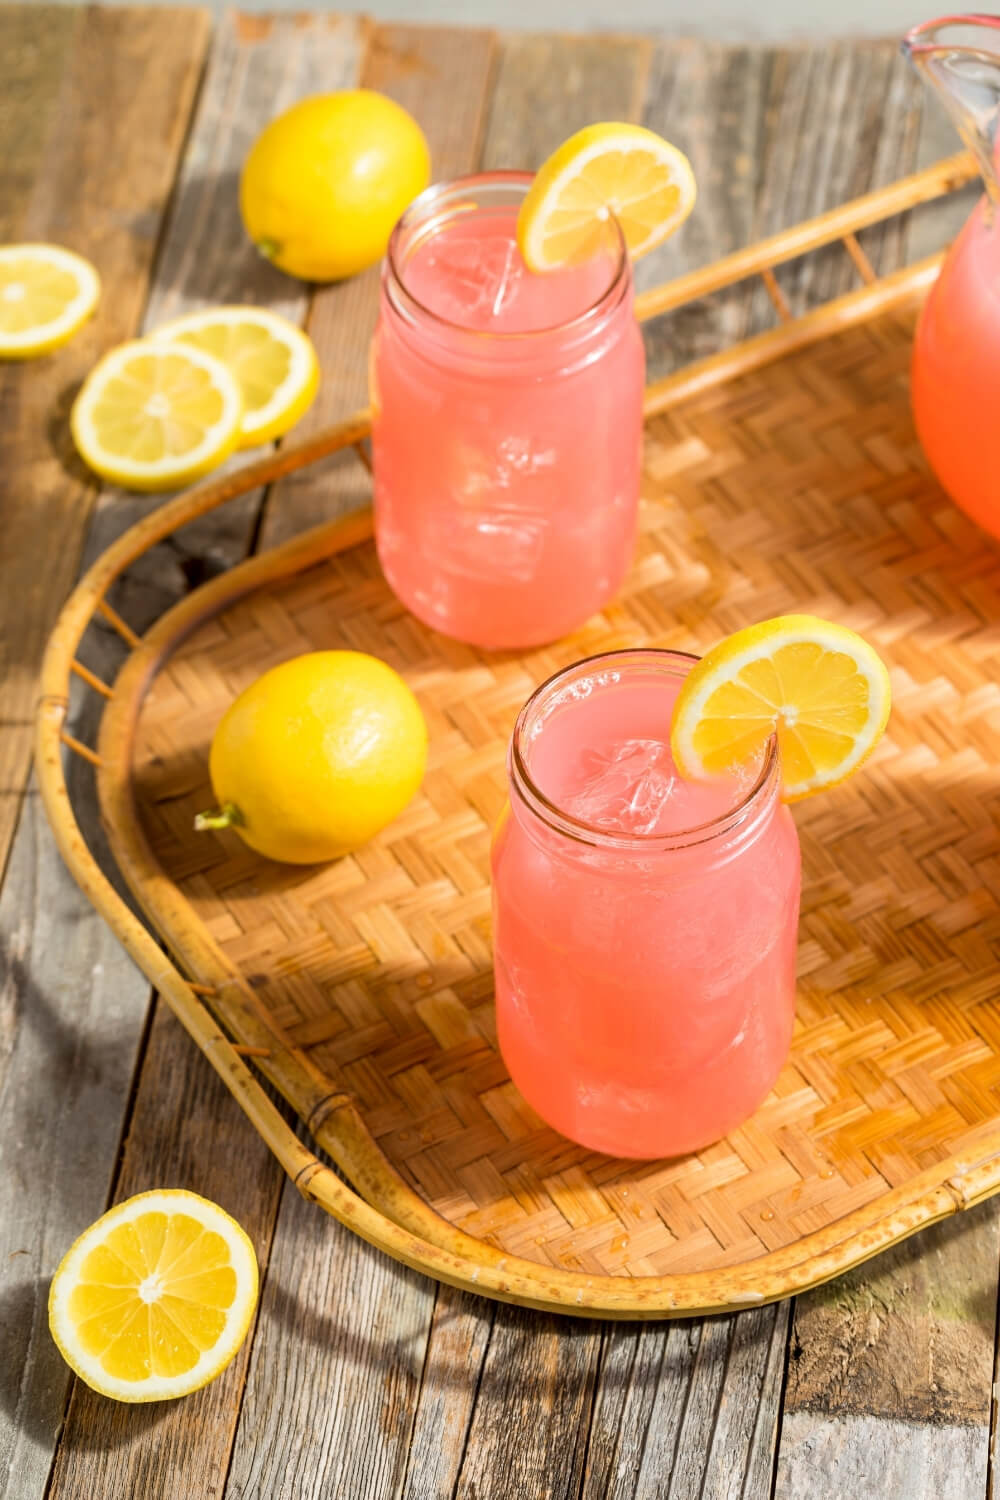 aesthetic photo of lemonade